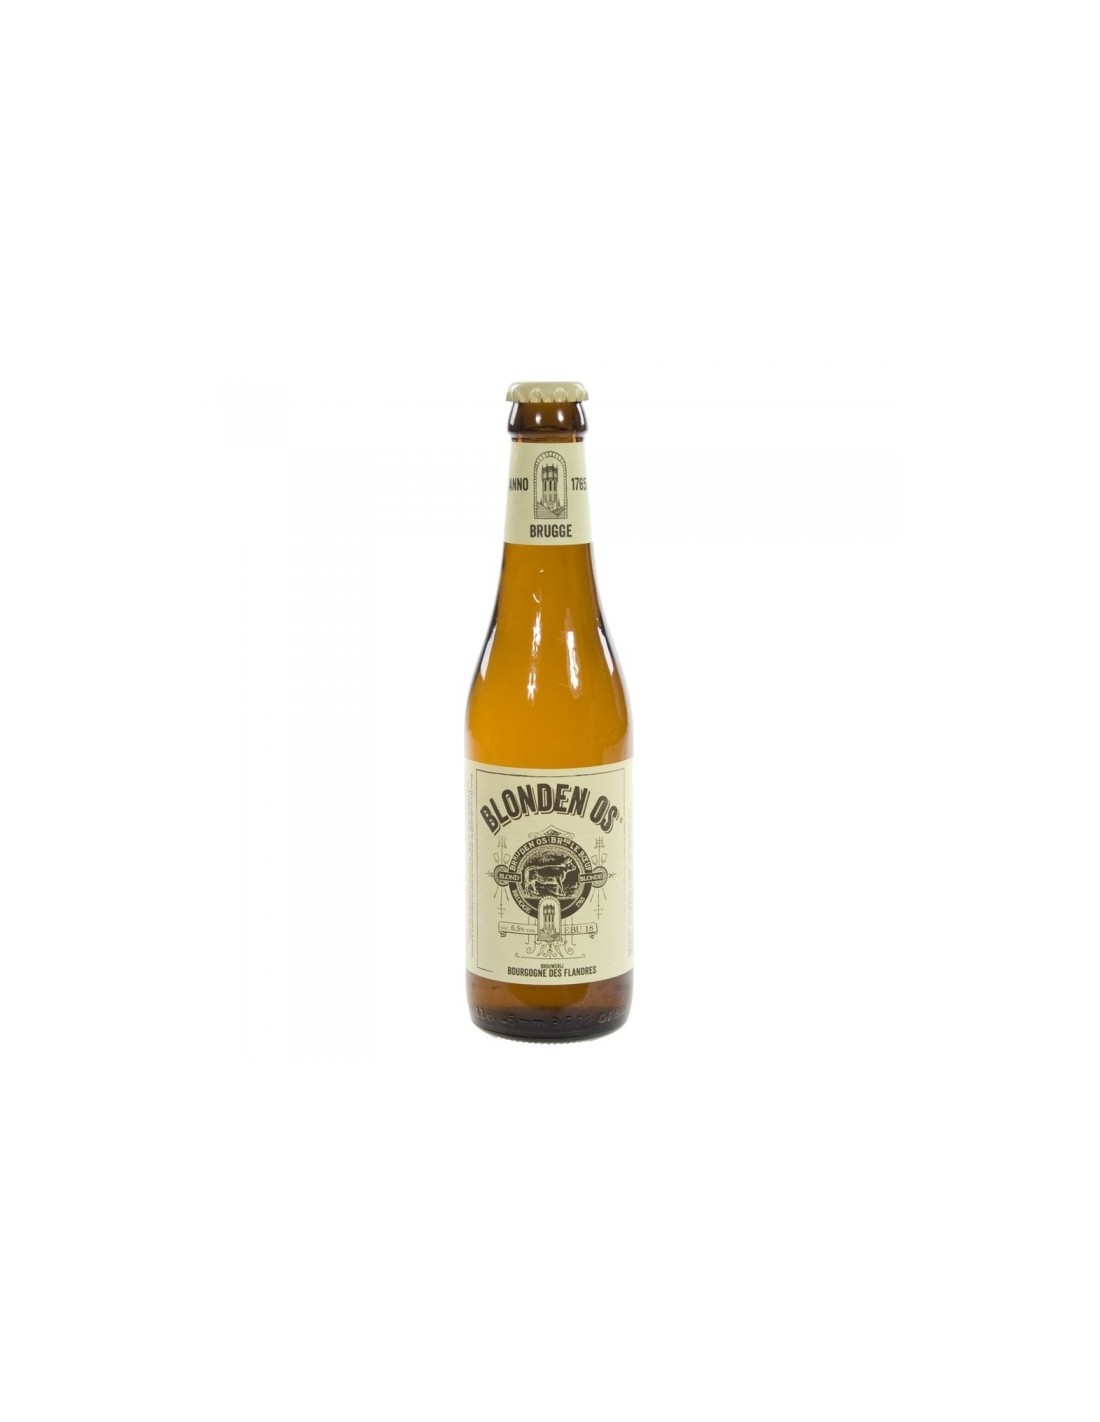 Bere blonda Bourgogne des Flandres, 6% alc., 0.33L, Belgia alcooldiscount.ro